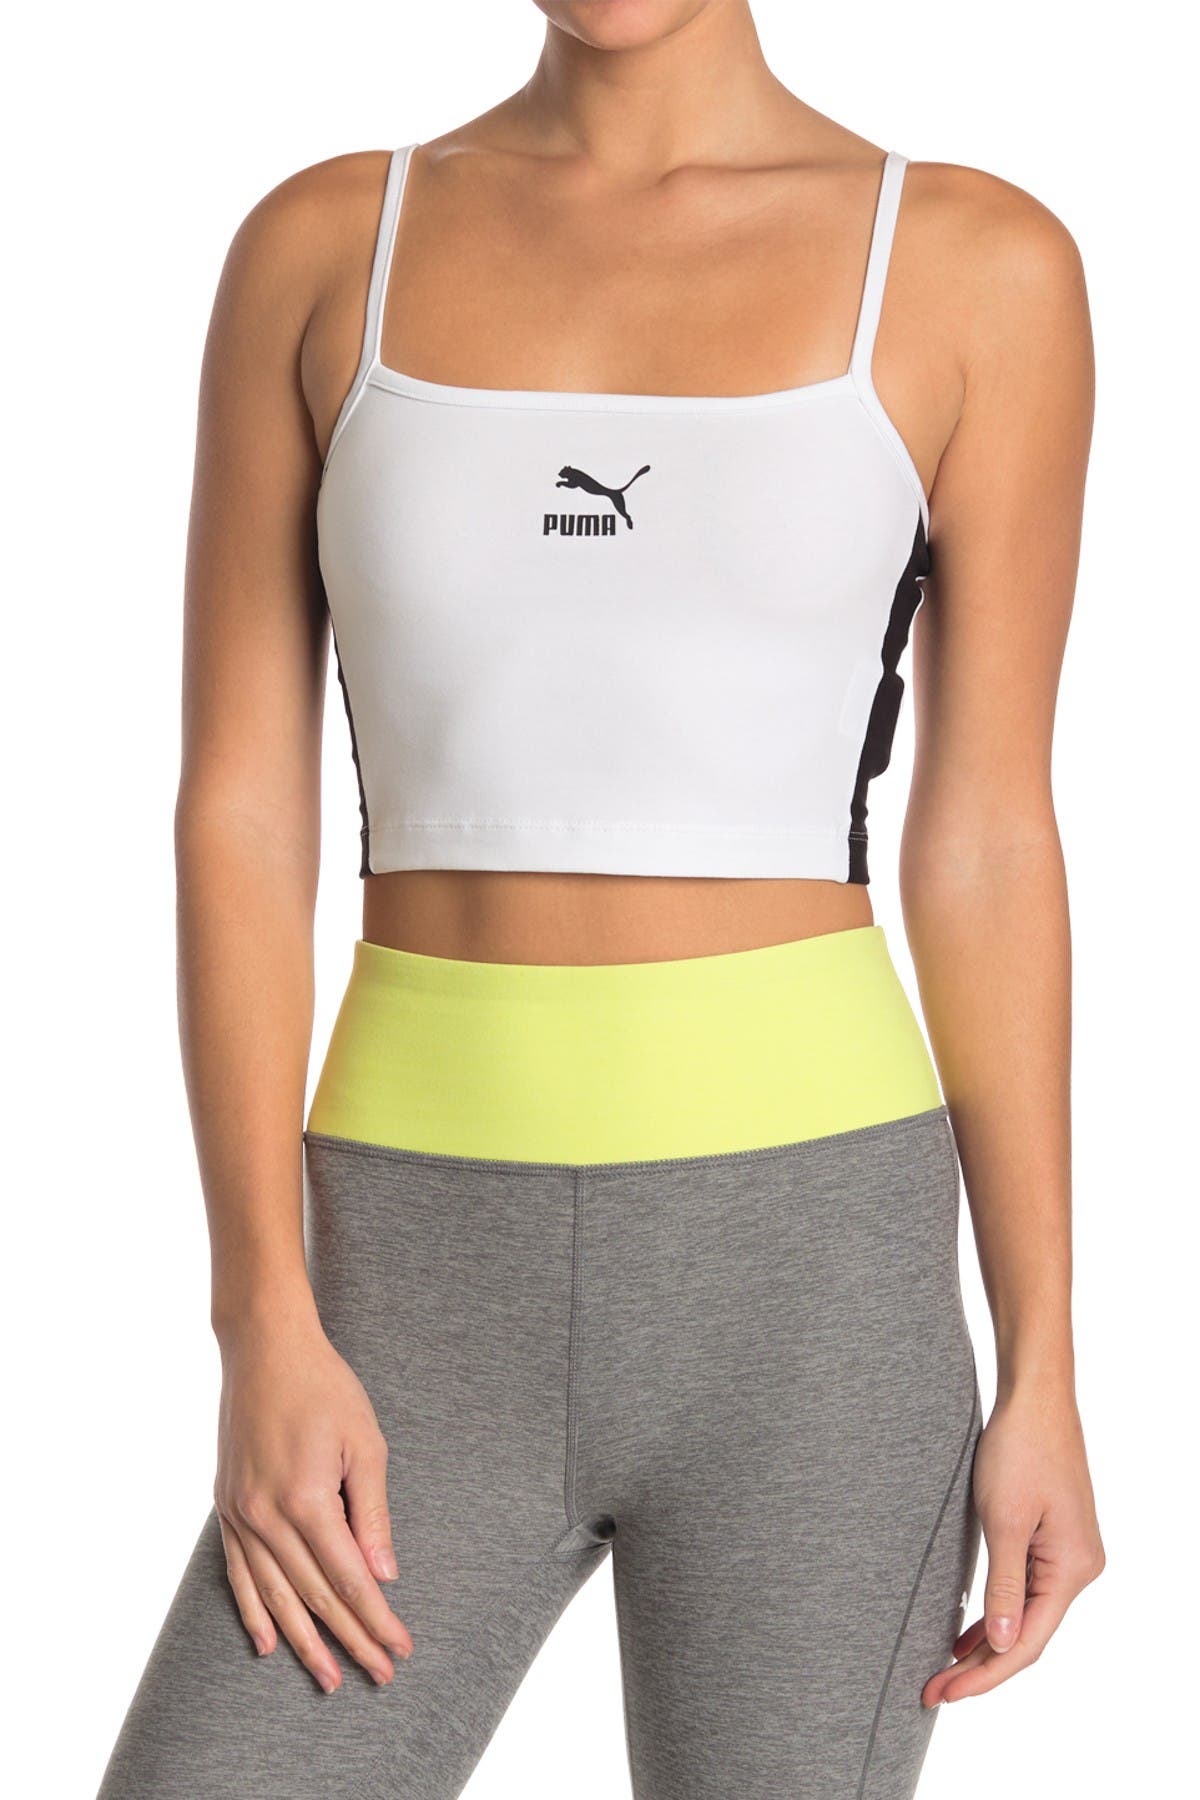 women's puma workout clothes